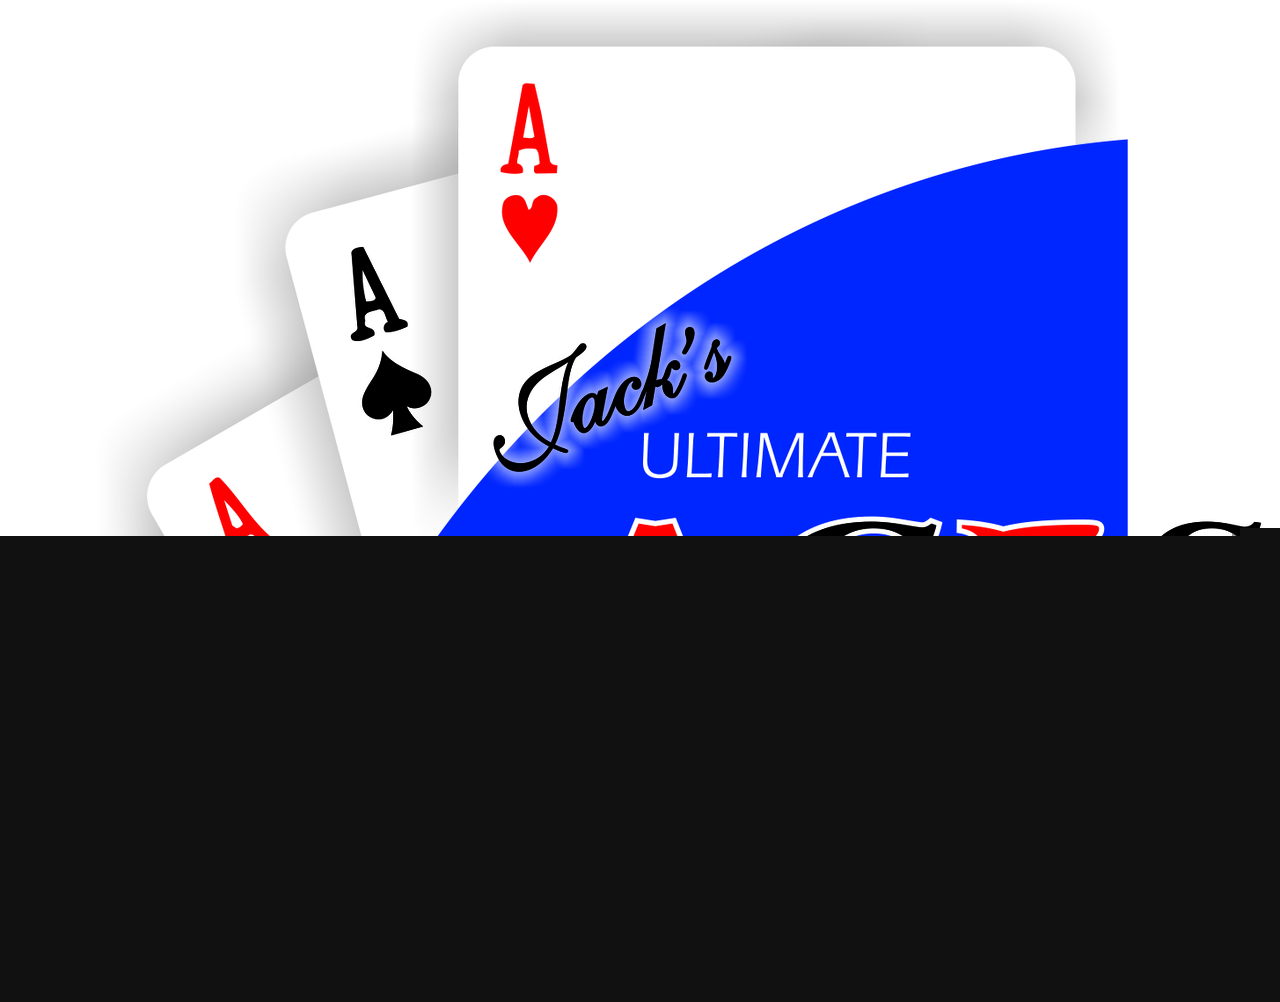 Jack - Ultimate Aces Unleashed